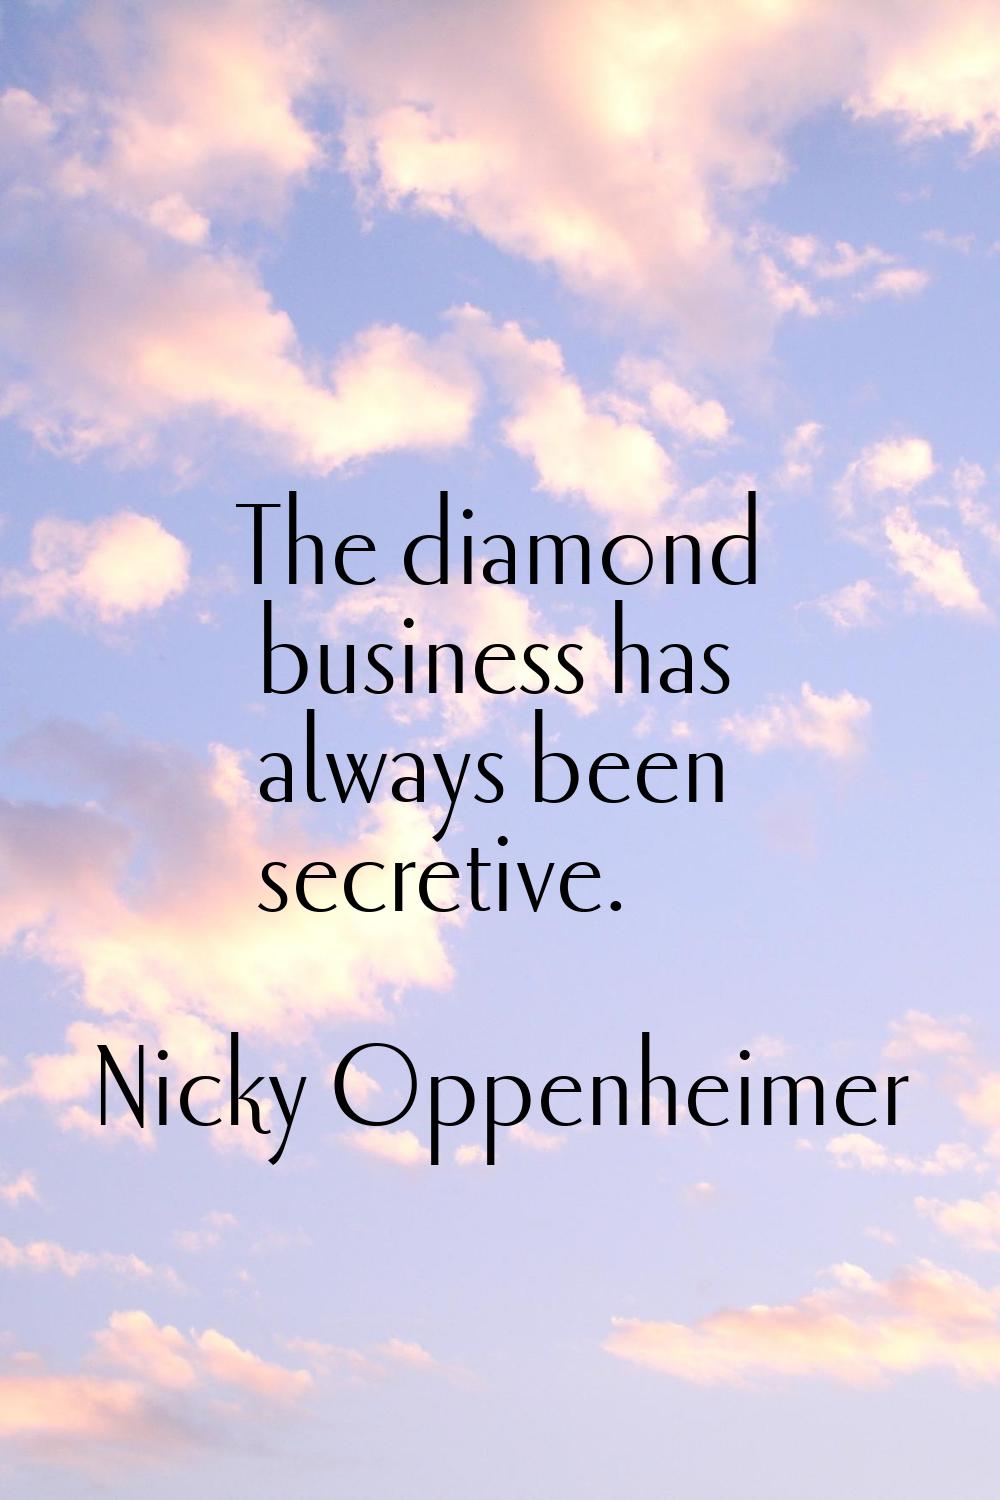 The diamond business has always been secretive.